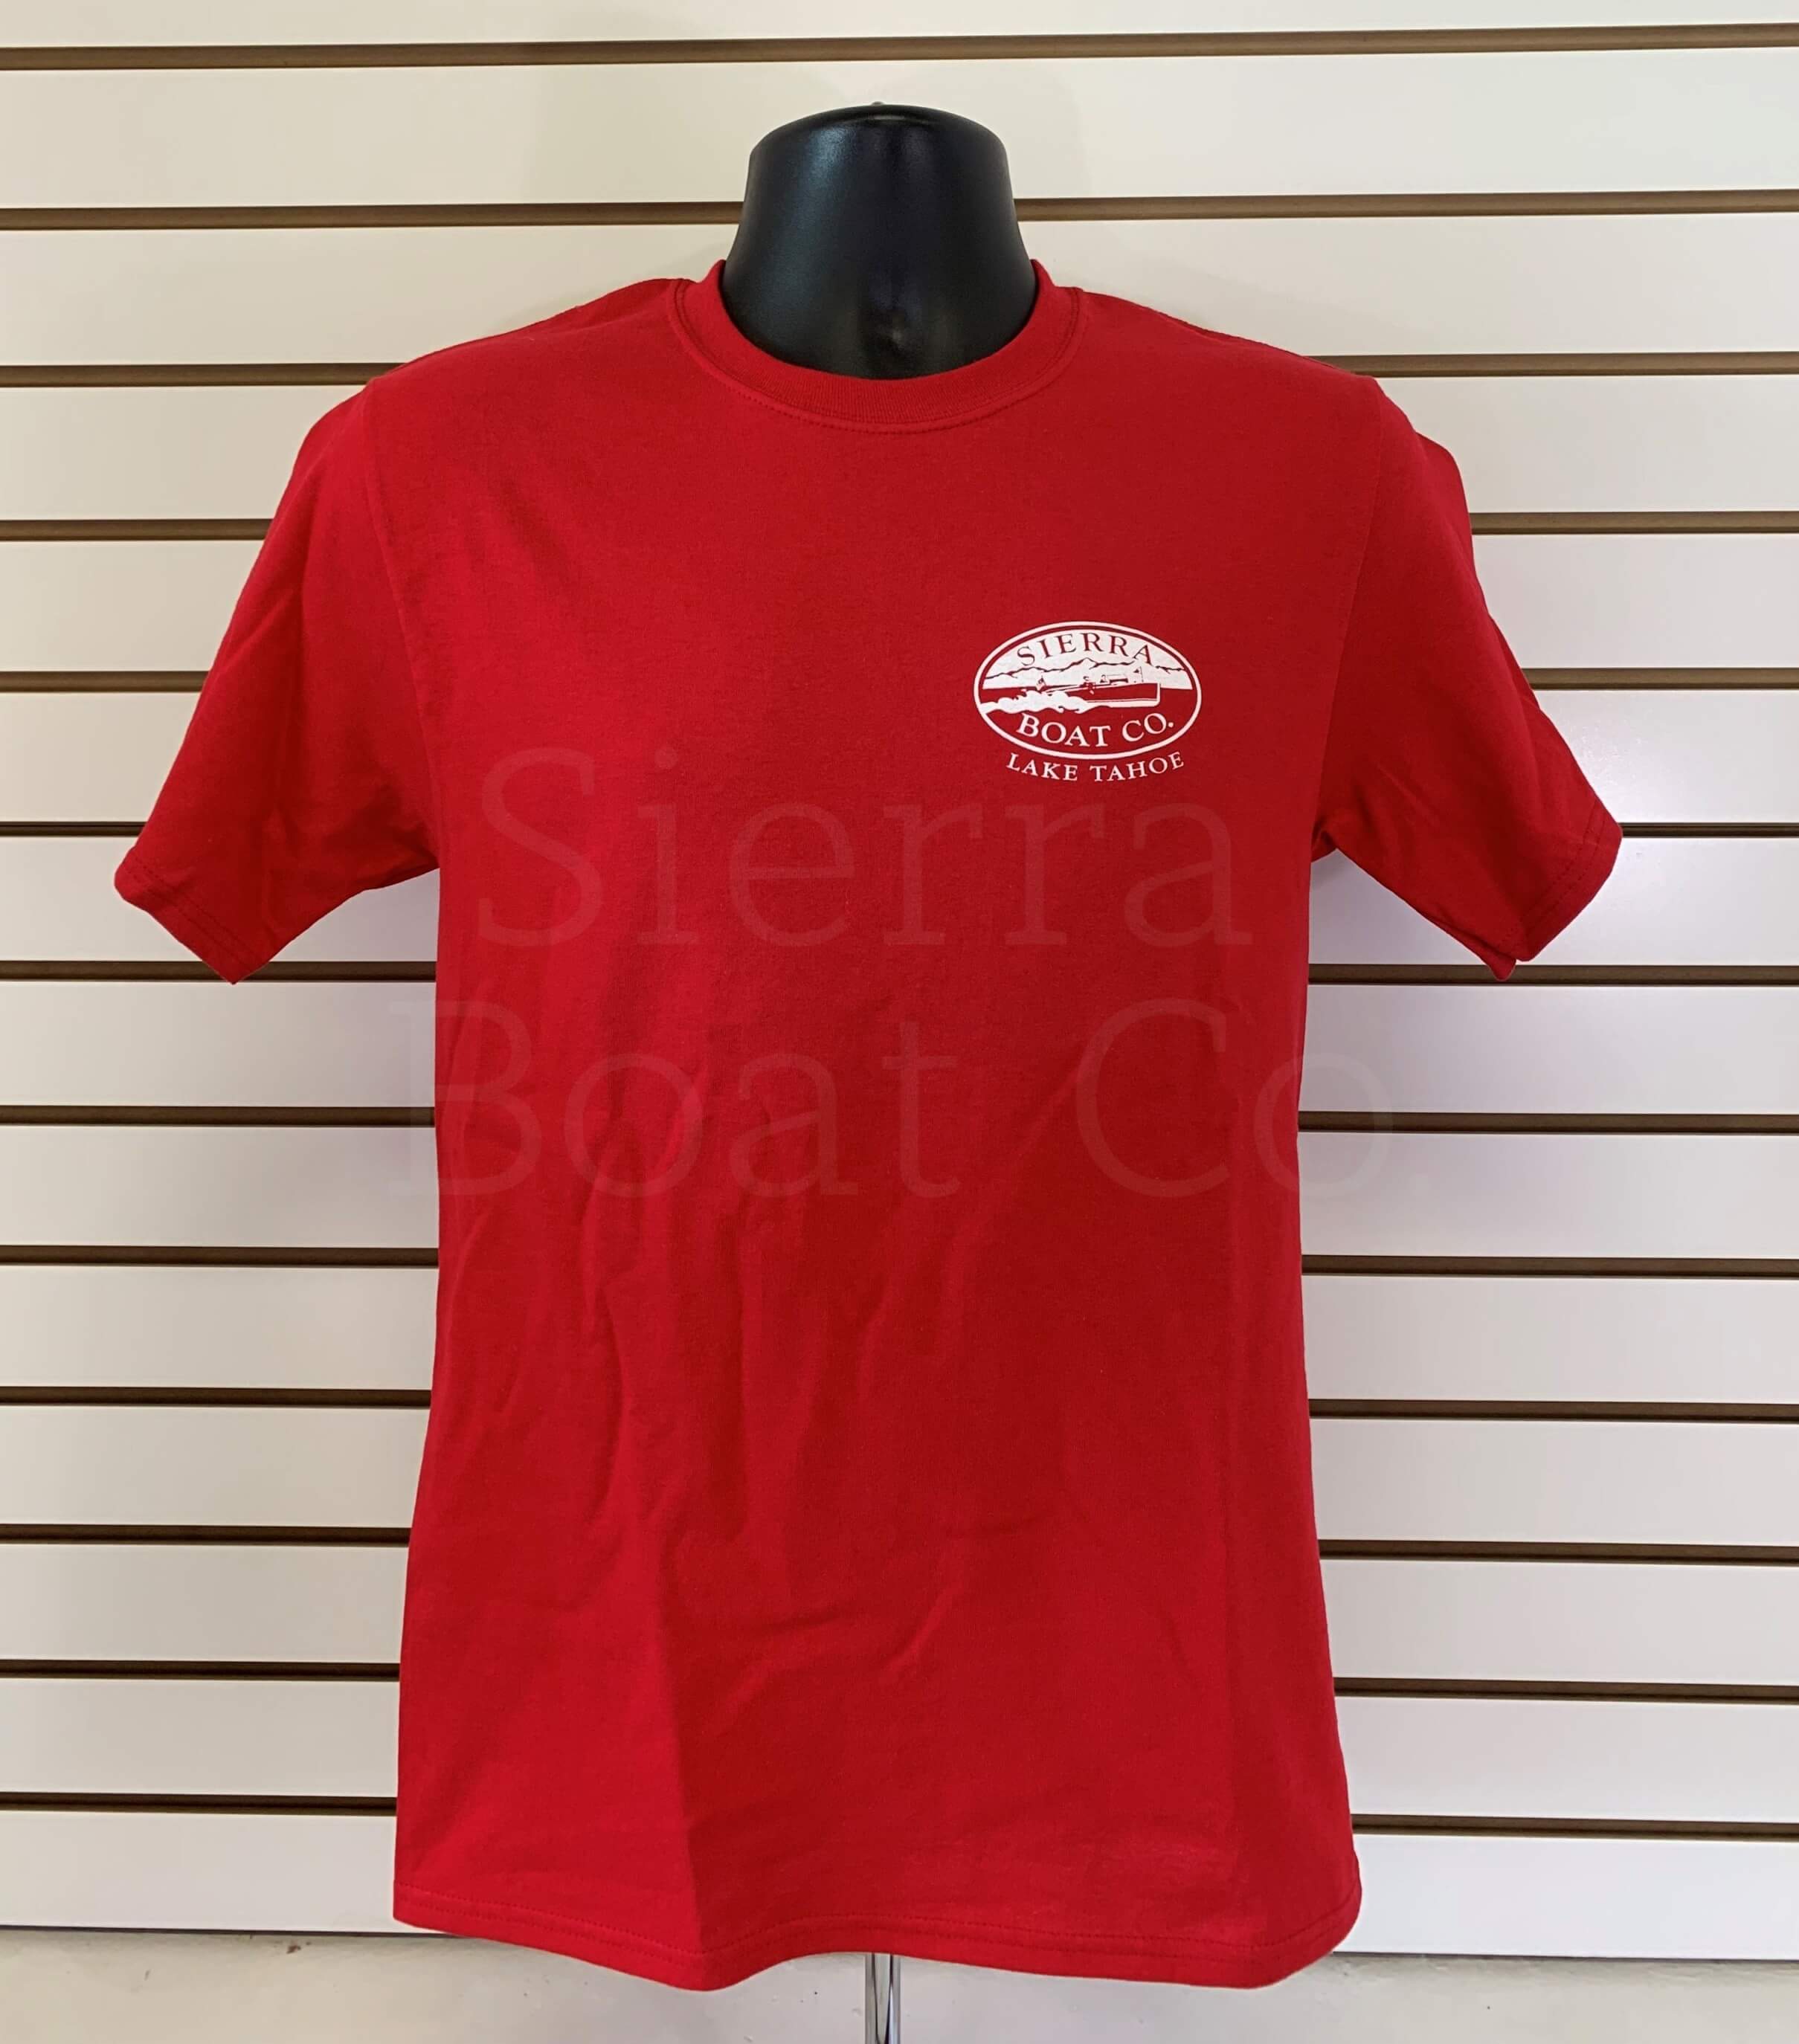 T-shirt. Classic Boat Company - Sierra red